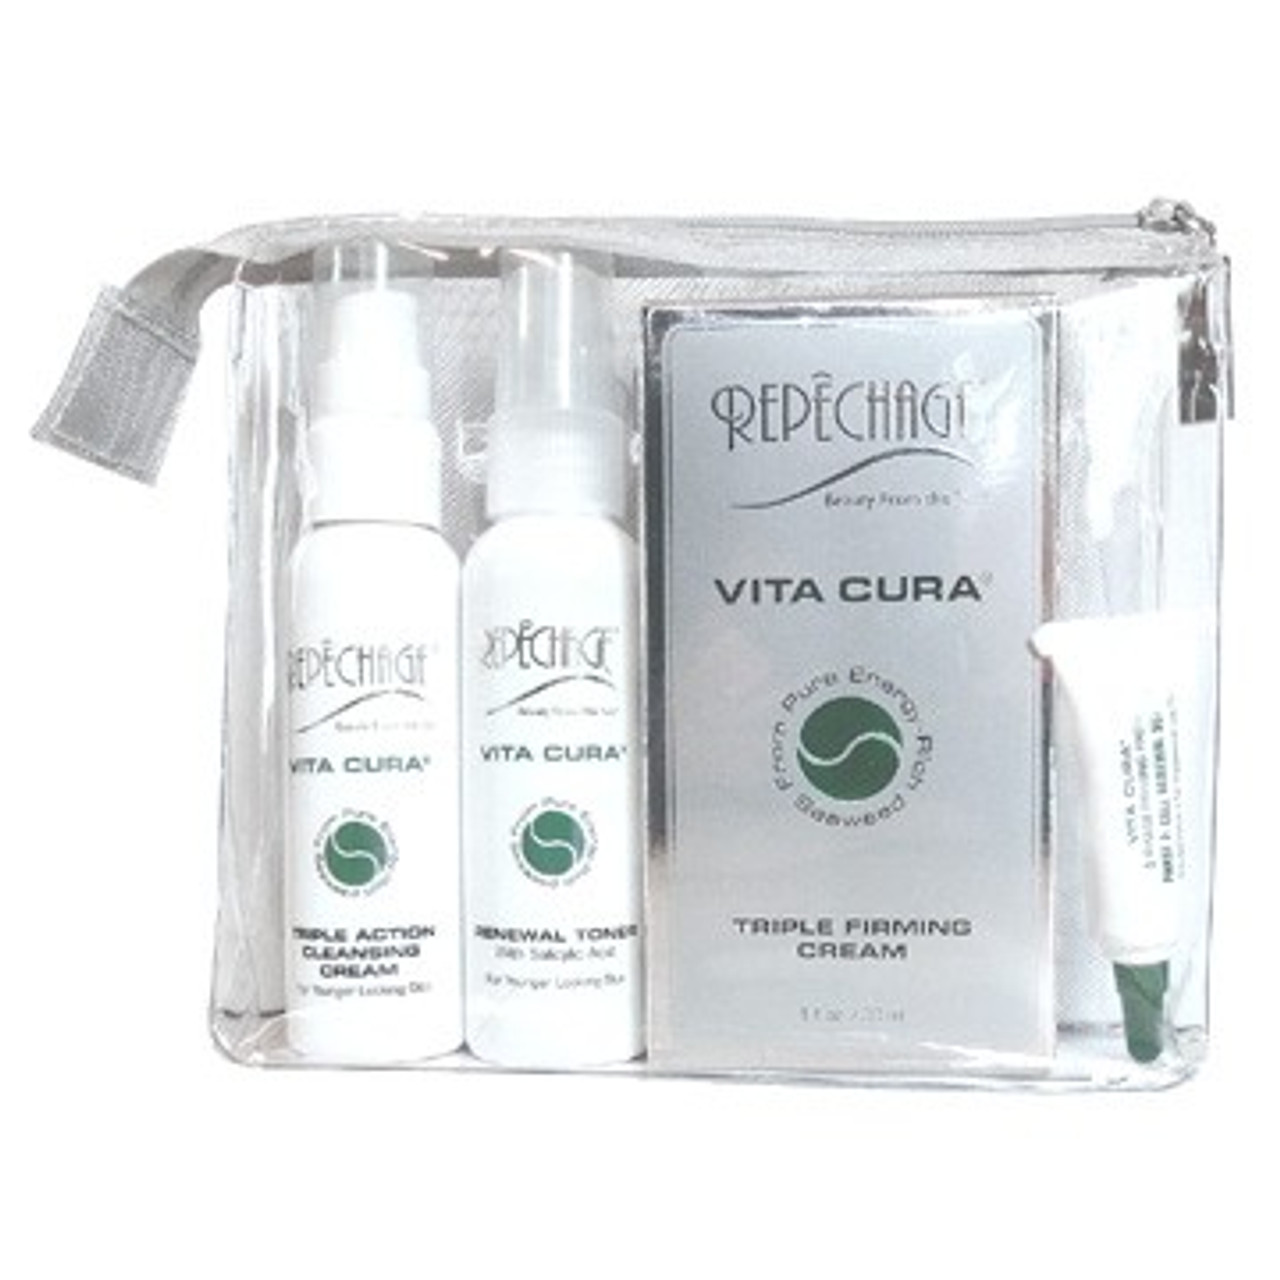 Repechage Vita Cura Travel/Starter Kit